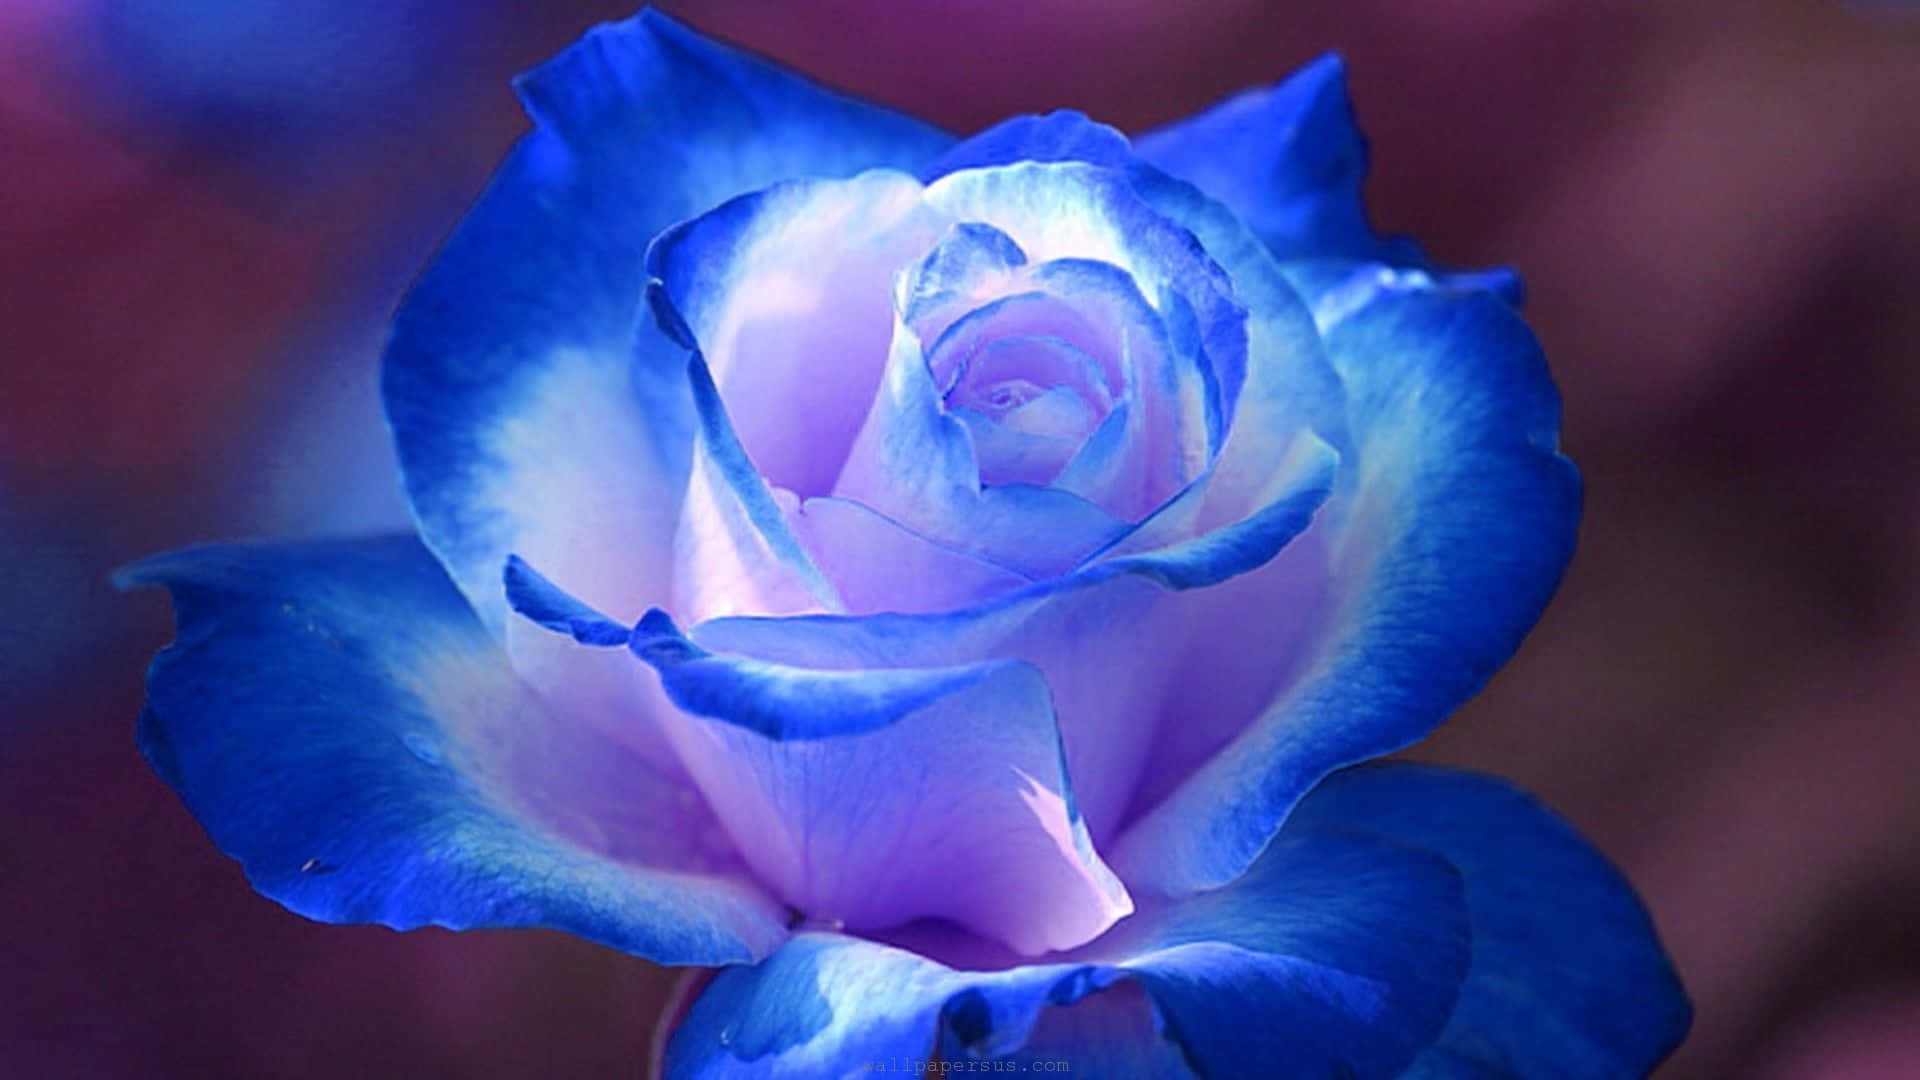 Caption: Mystical Blue Rose Wallpaper